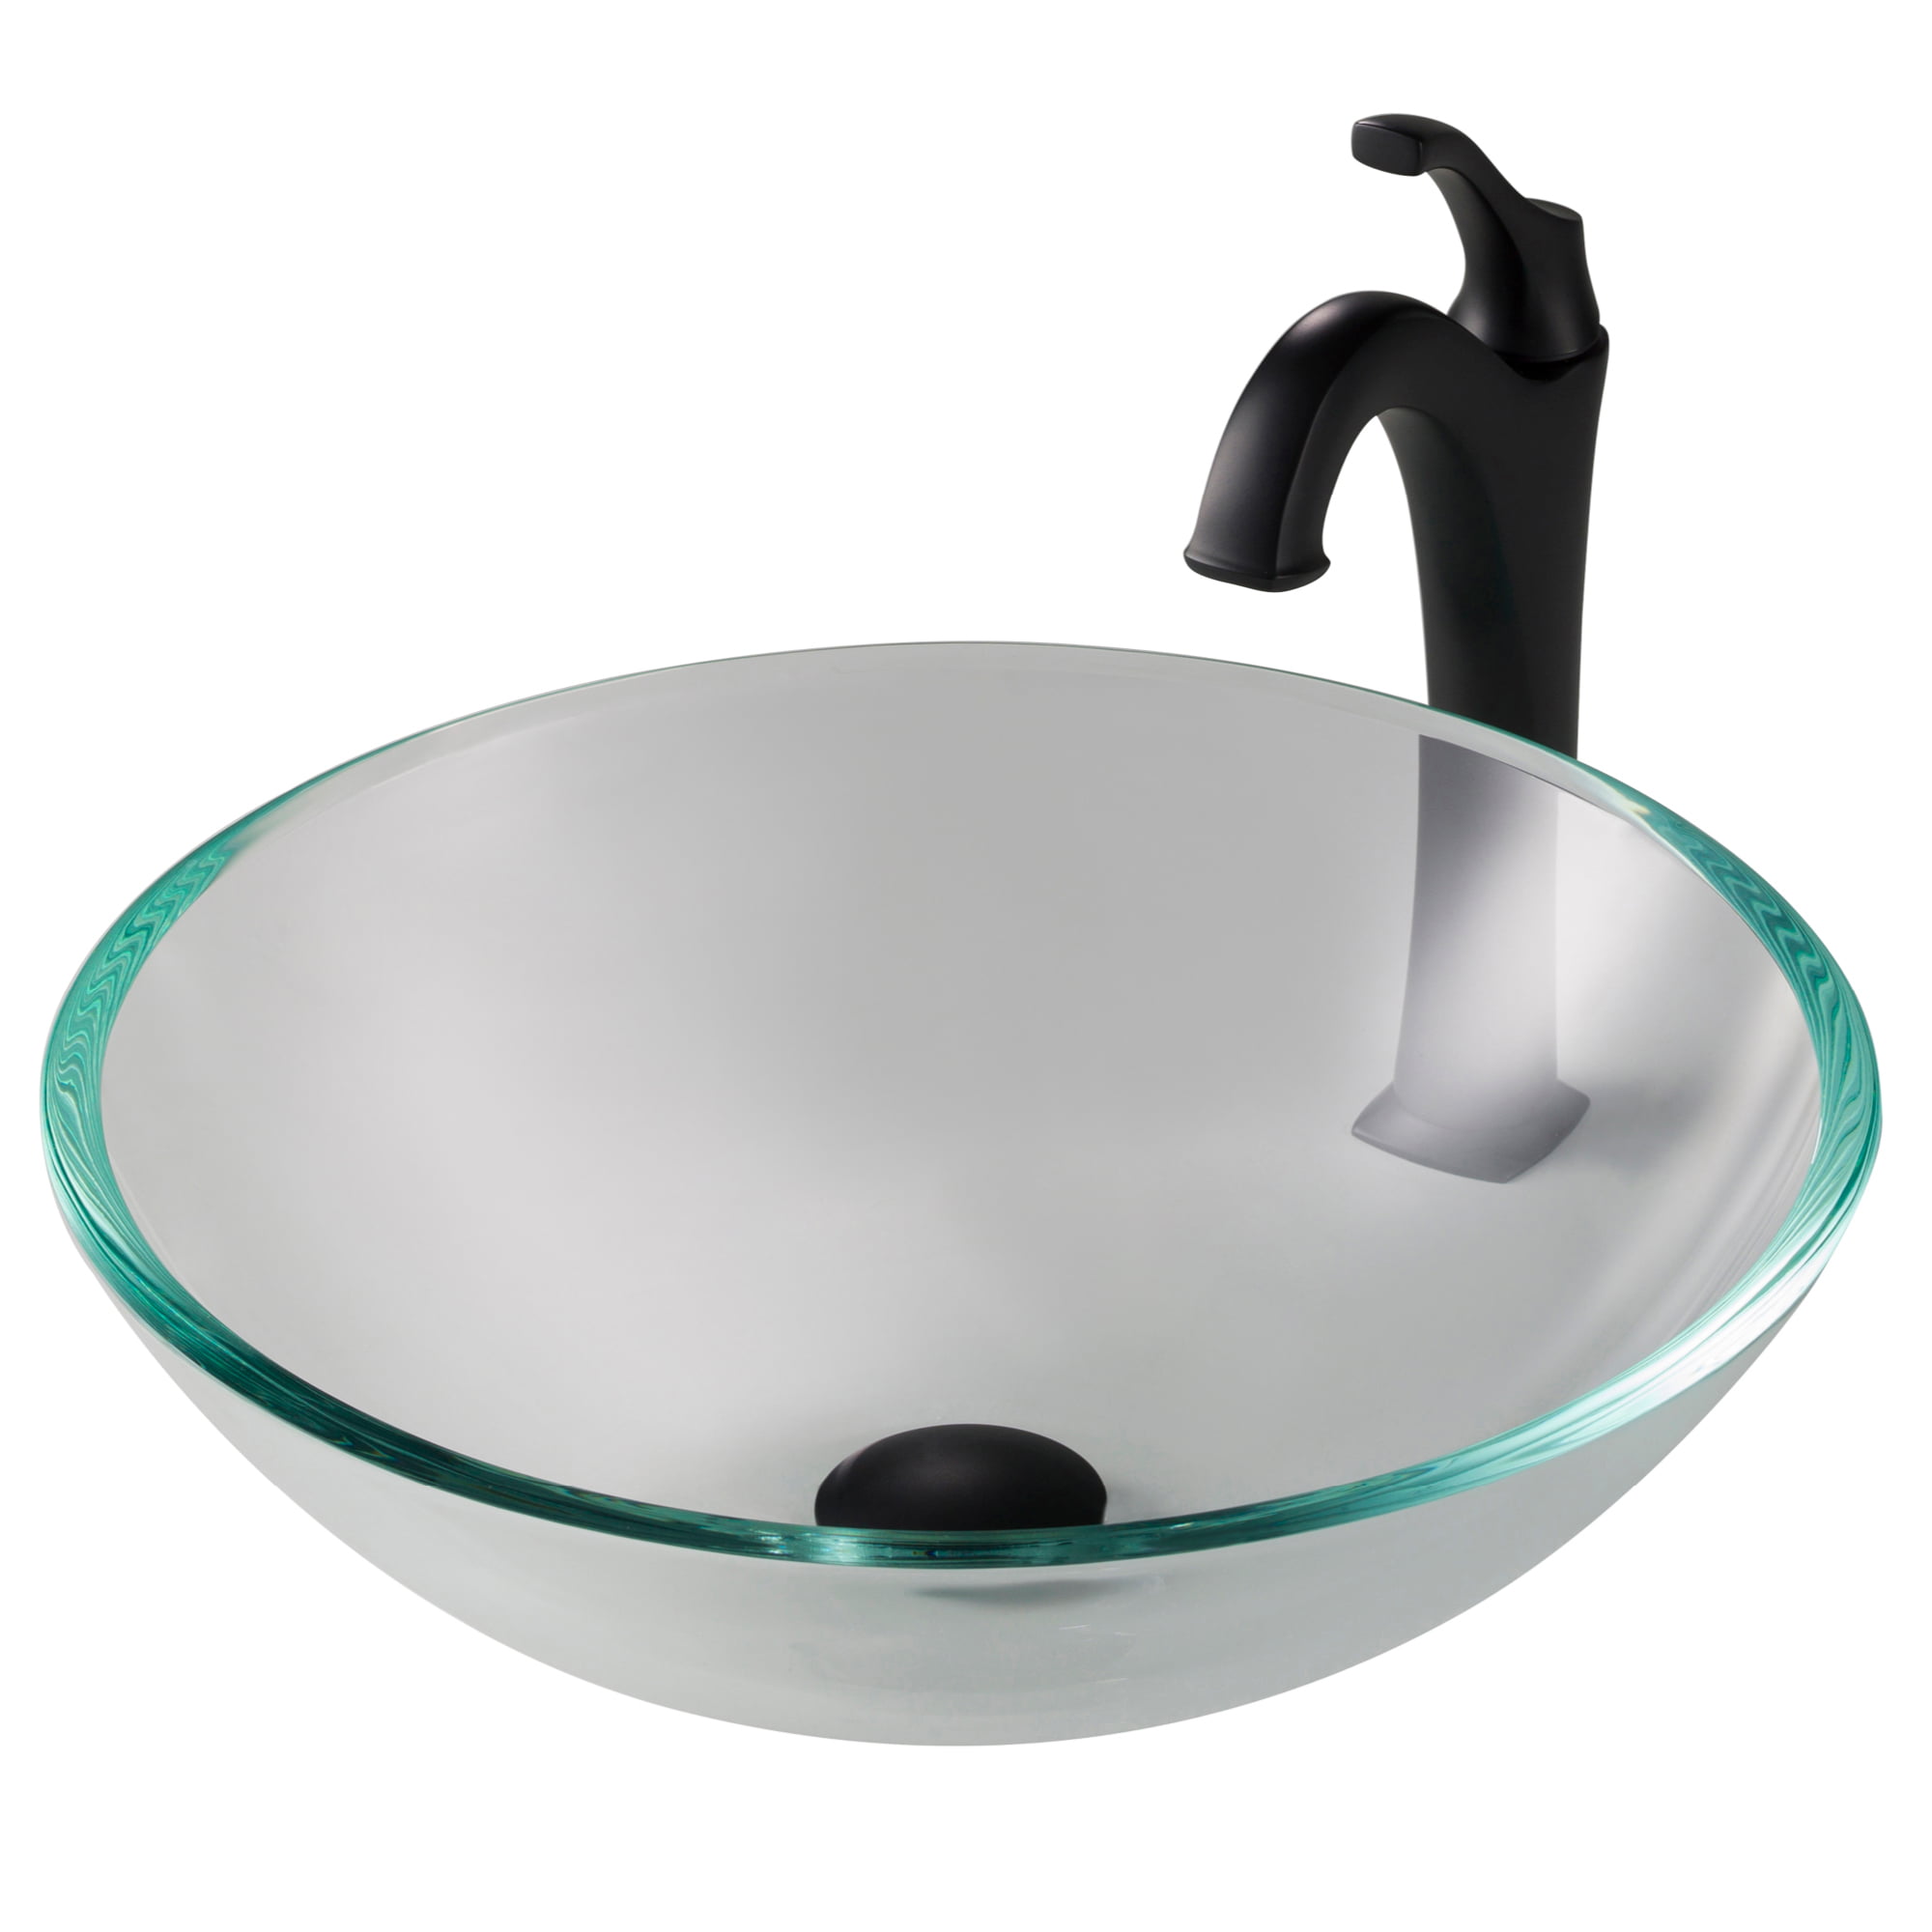 Black Bathroom Countertop Oval Sink ClearGlass Basin Bowl Mixer Faucet Drain Set 